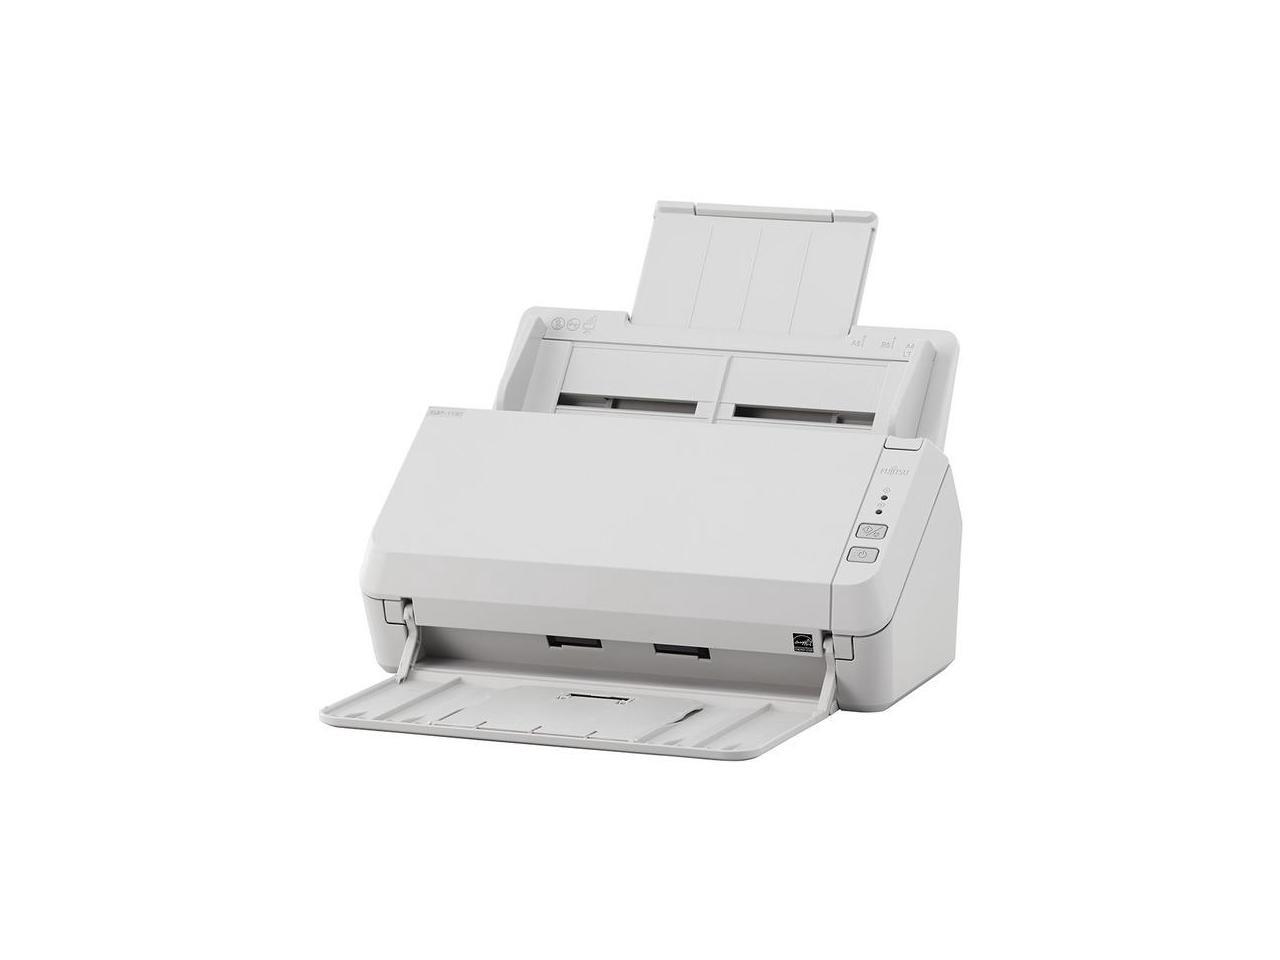 fujitsu scansnap ix500 color duplex desk scanner twain